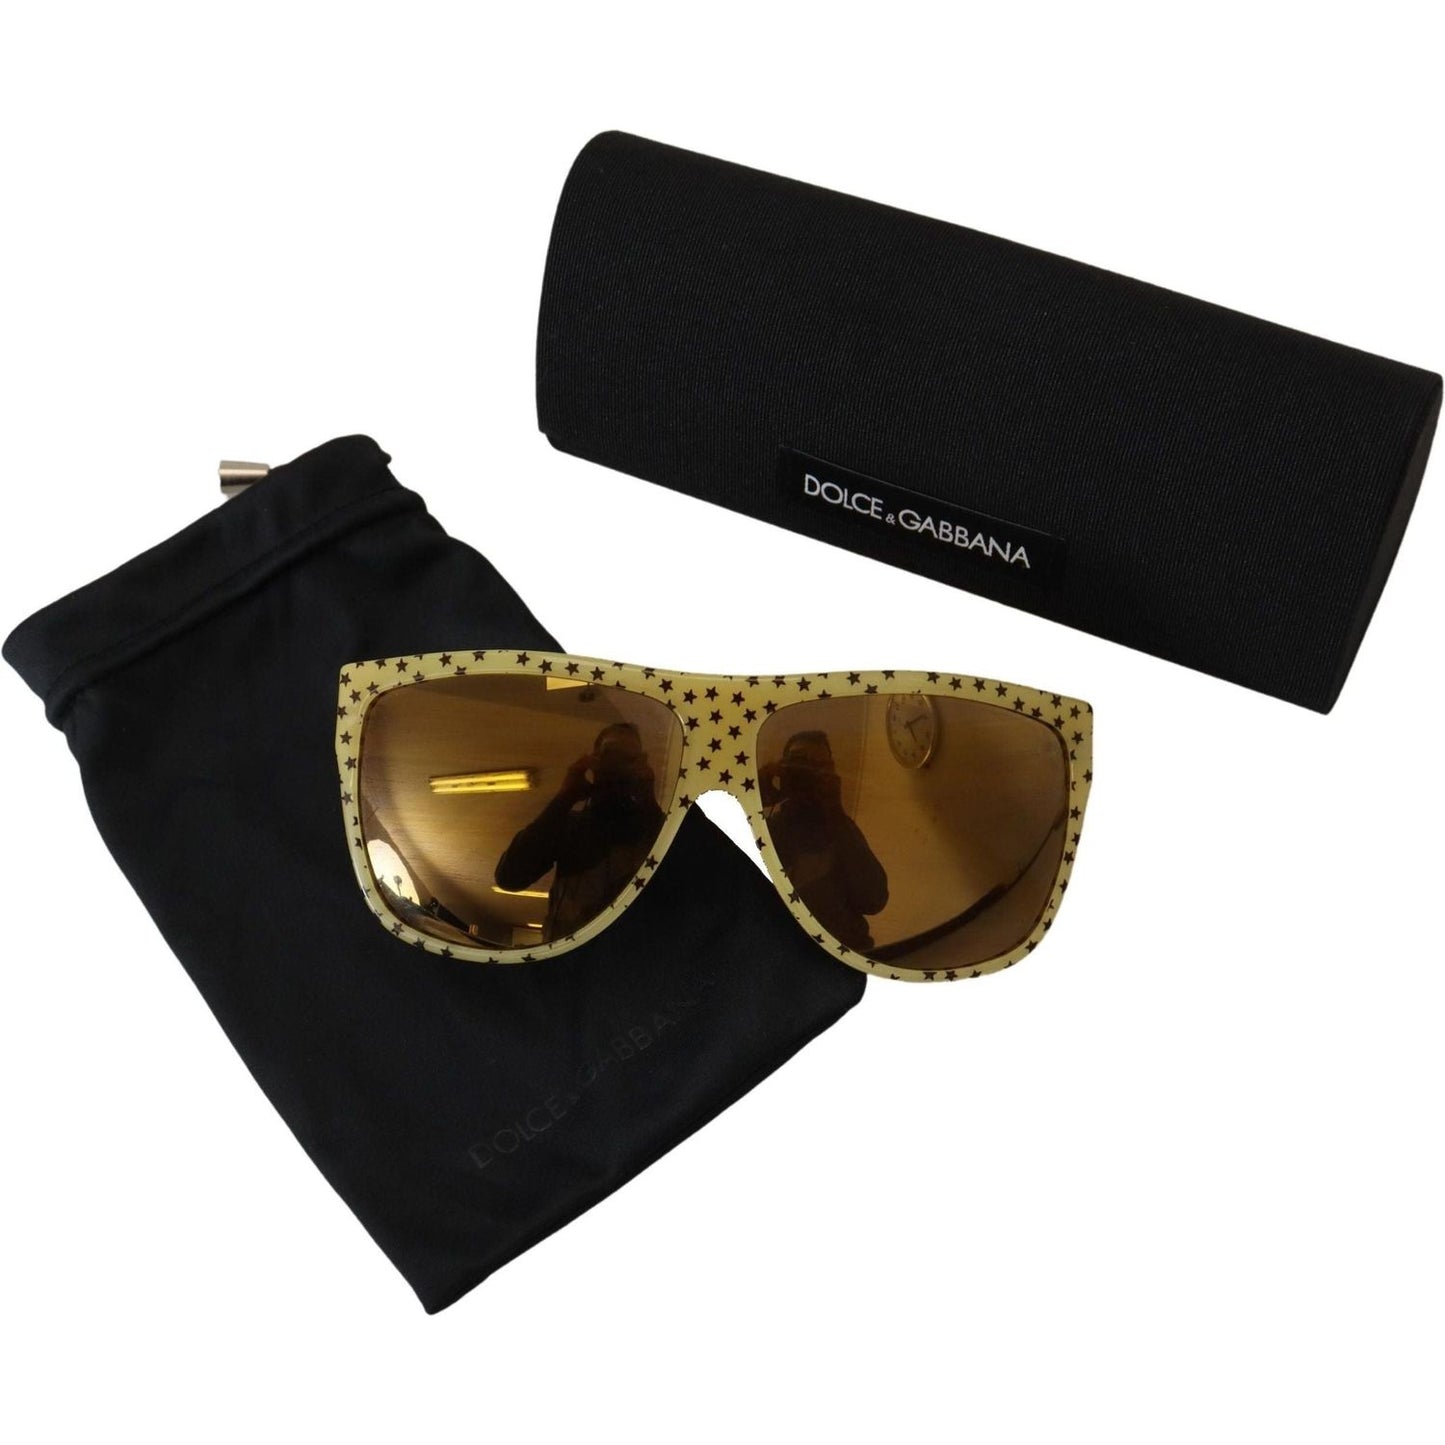 Dolce & Gabbana Stellar Chic Square Sunglasses in Yellow yellow-stars-acetate-square-shades-dg4125-sunglasses IMG_5278-scaled-aa851388-903.jpg